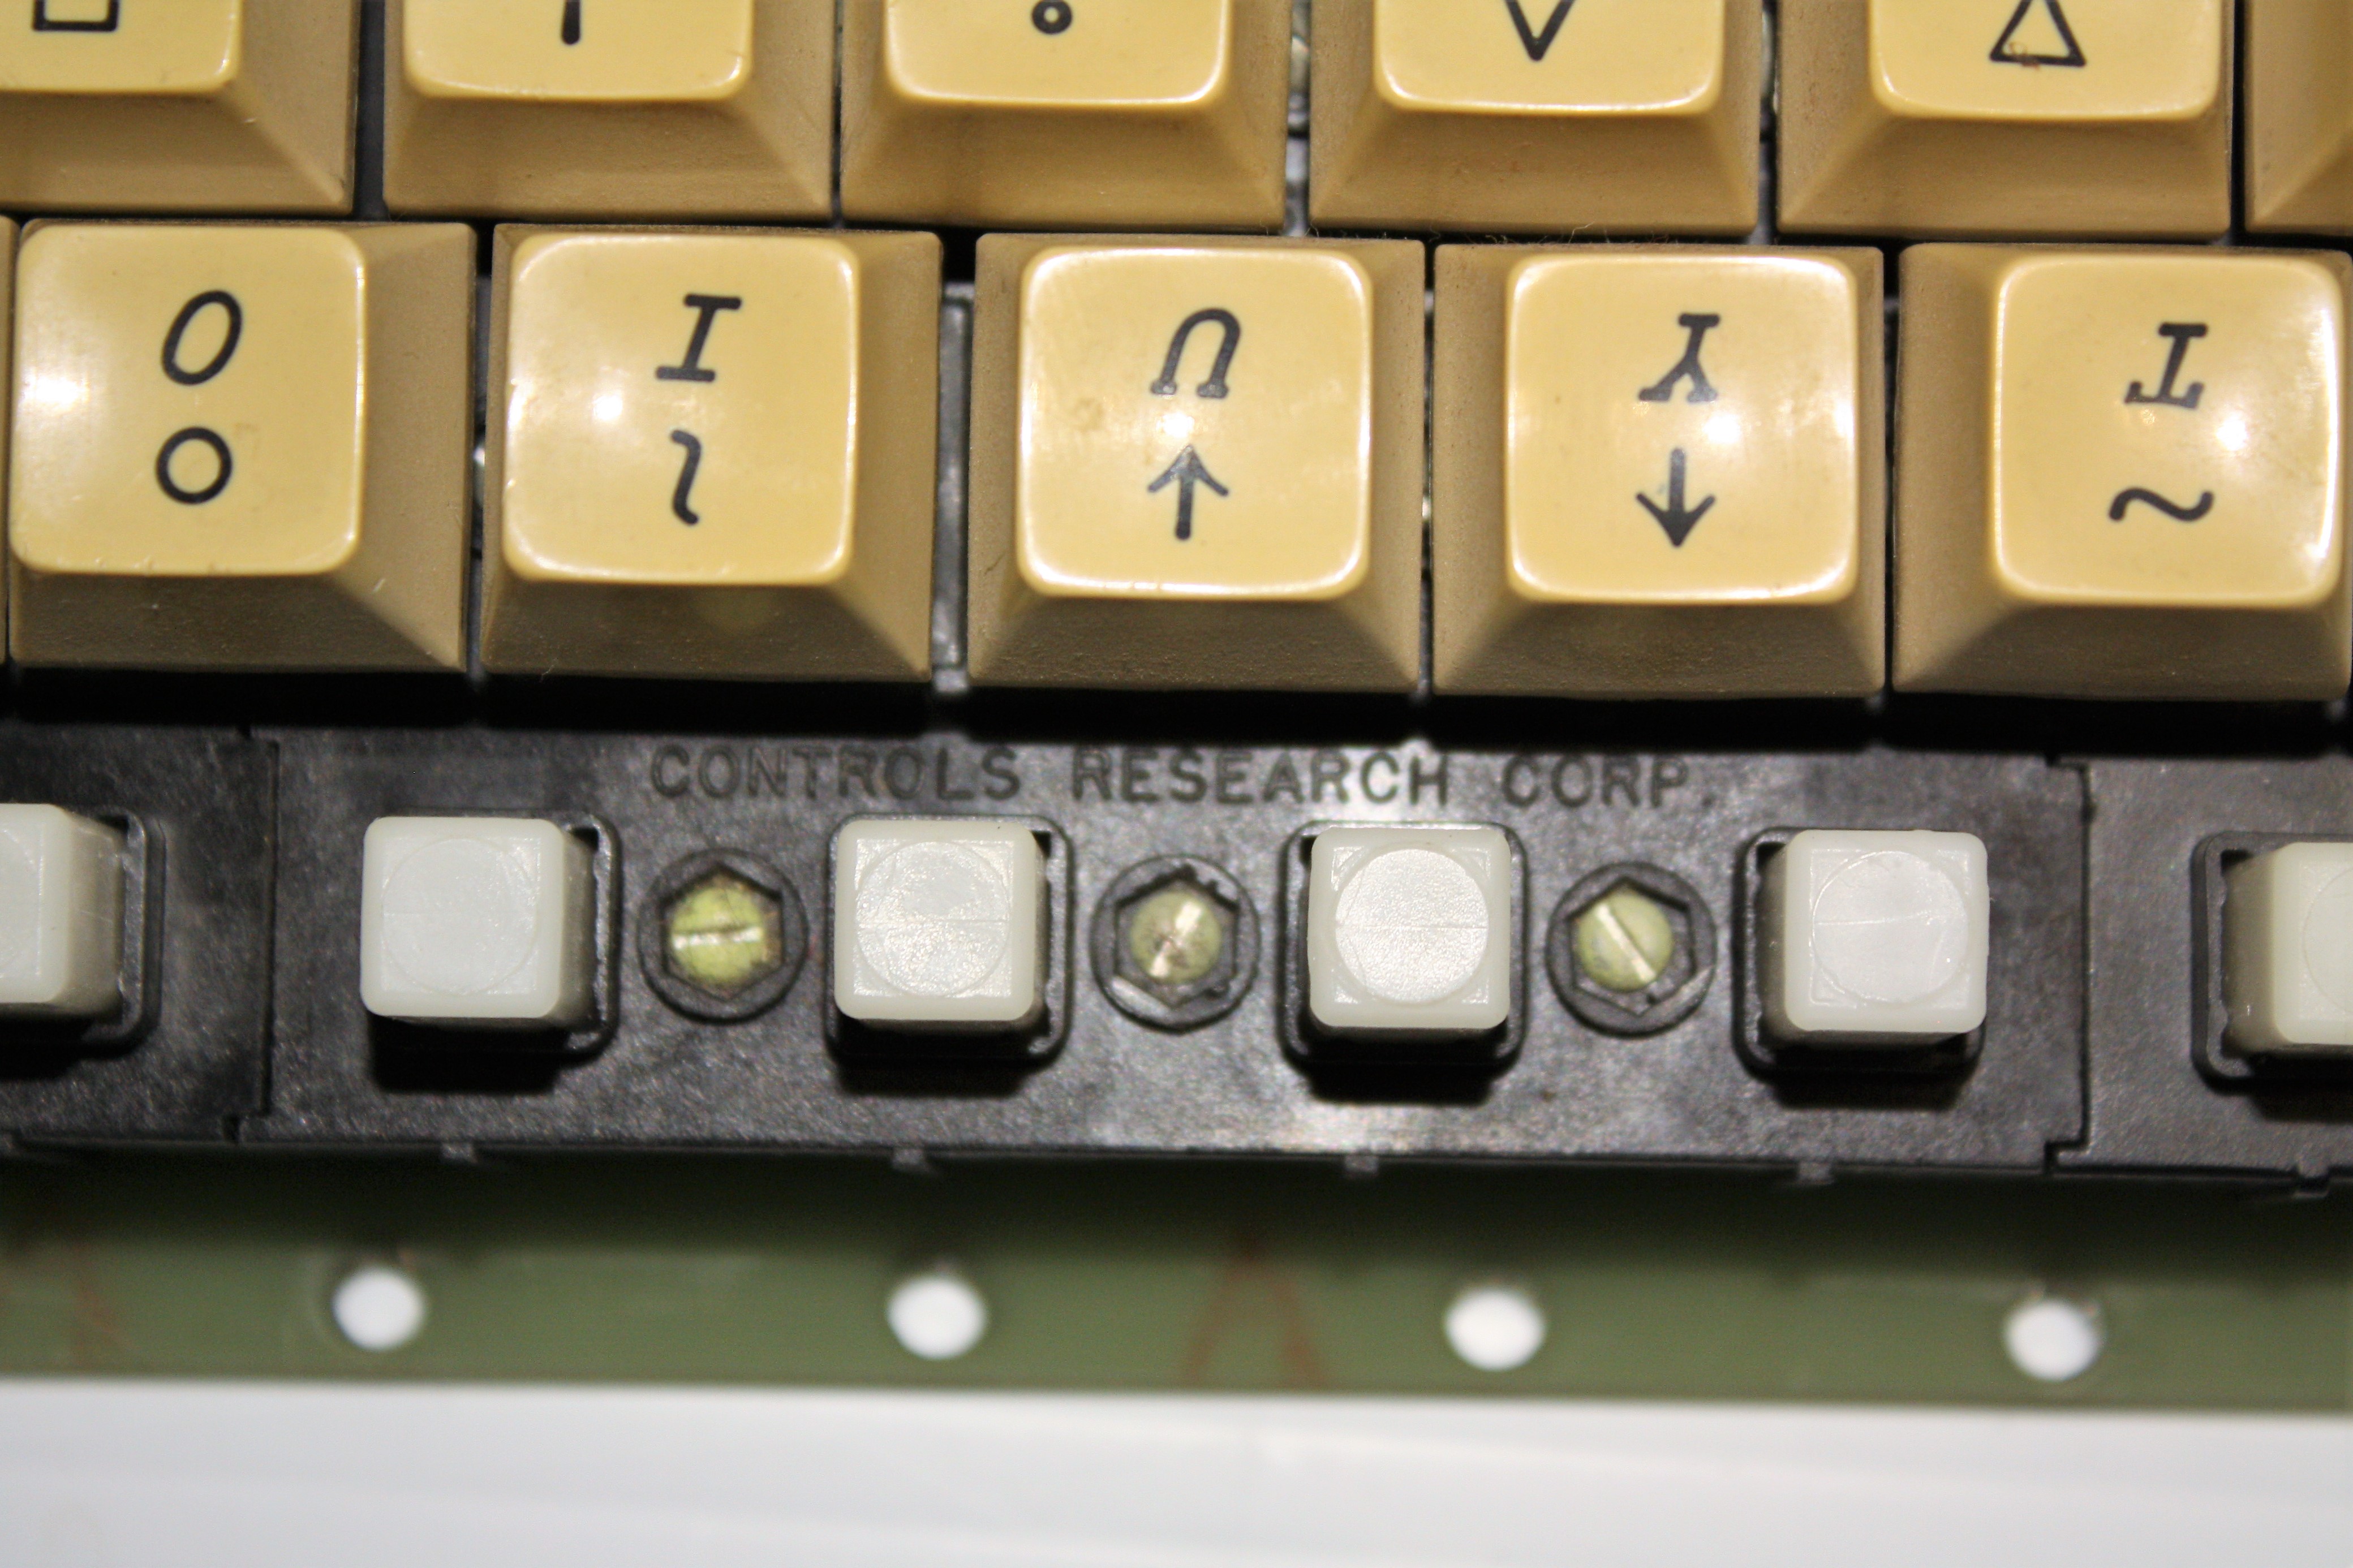 MCM70 - Controls Research Corp keys.JPG